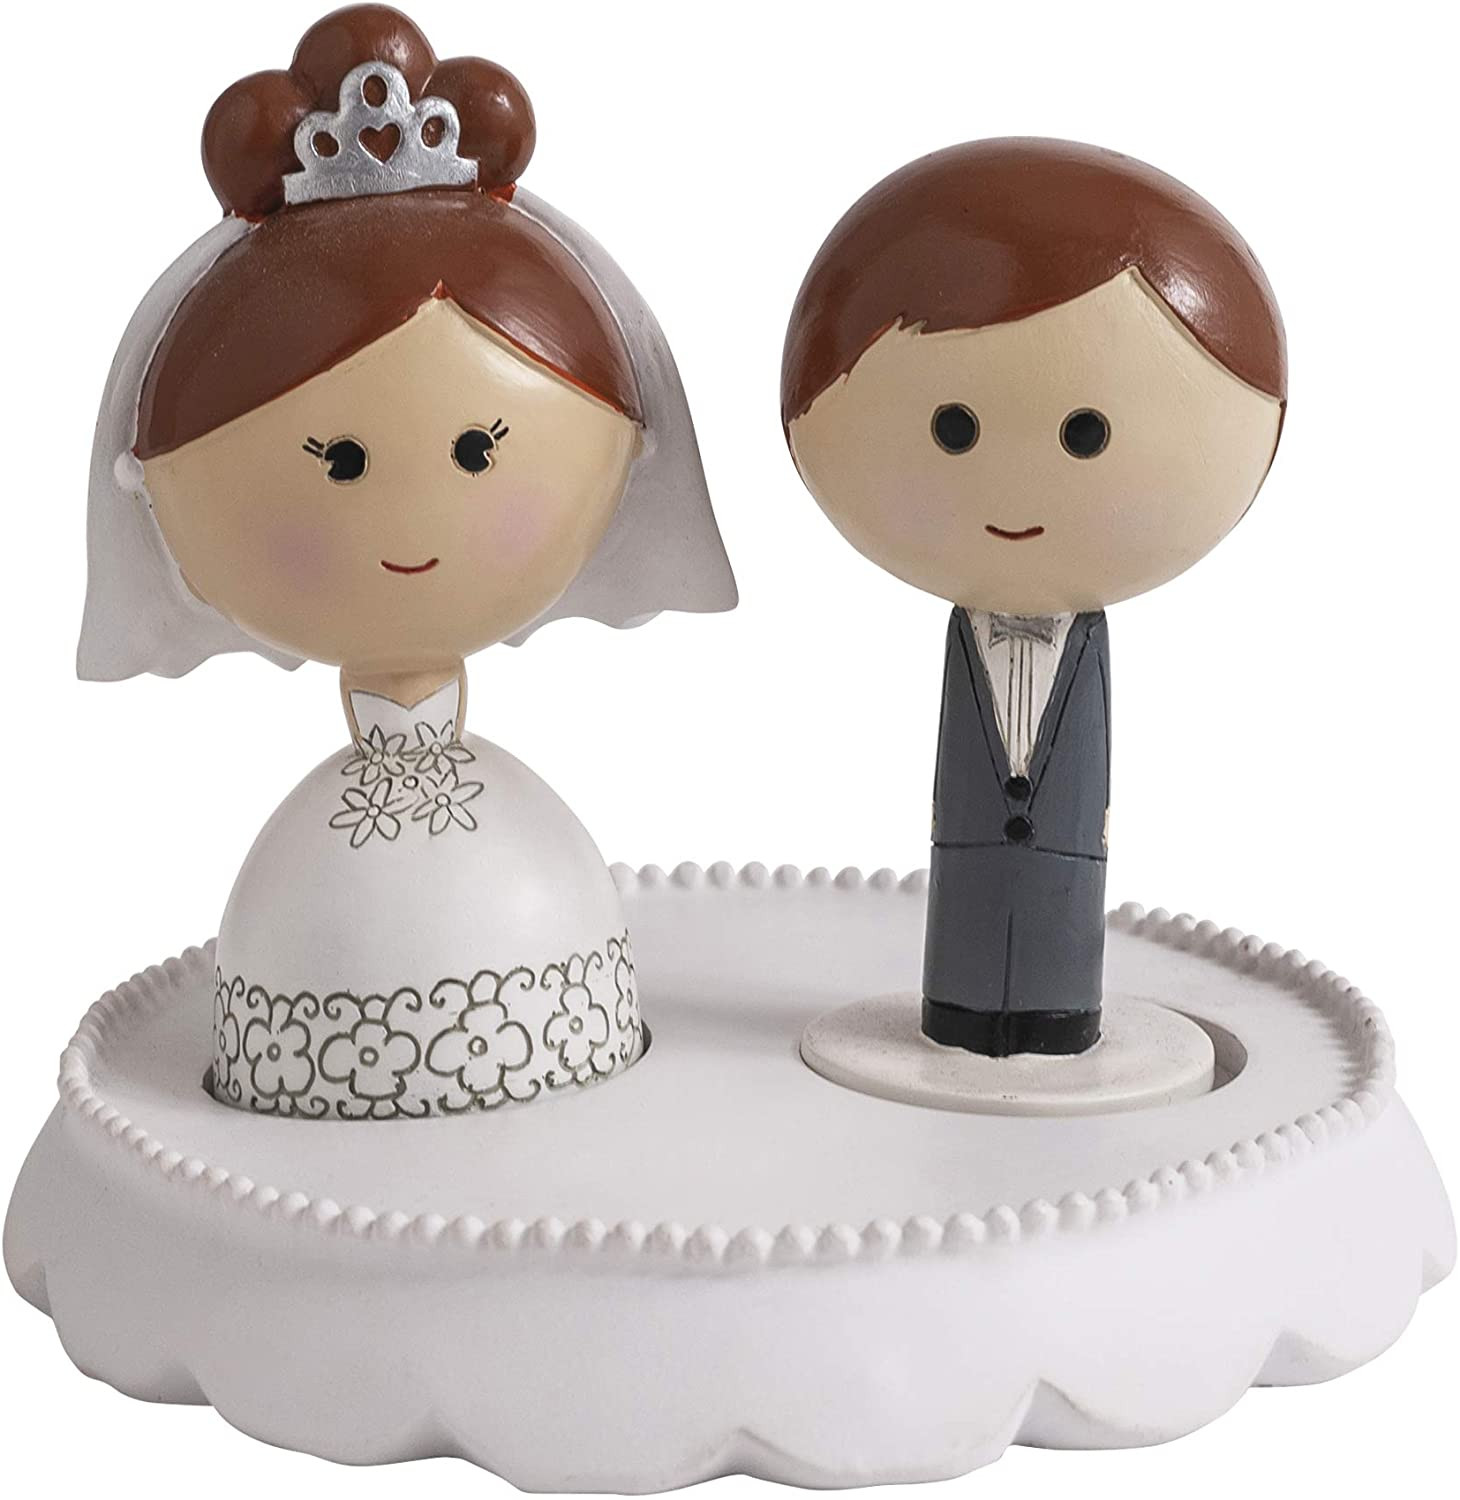 Walmart Wedding Cake Toppers
 Ivy Lane Design AM1053 Wedding Cake Topper e Size